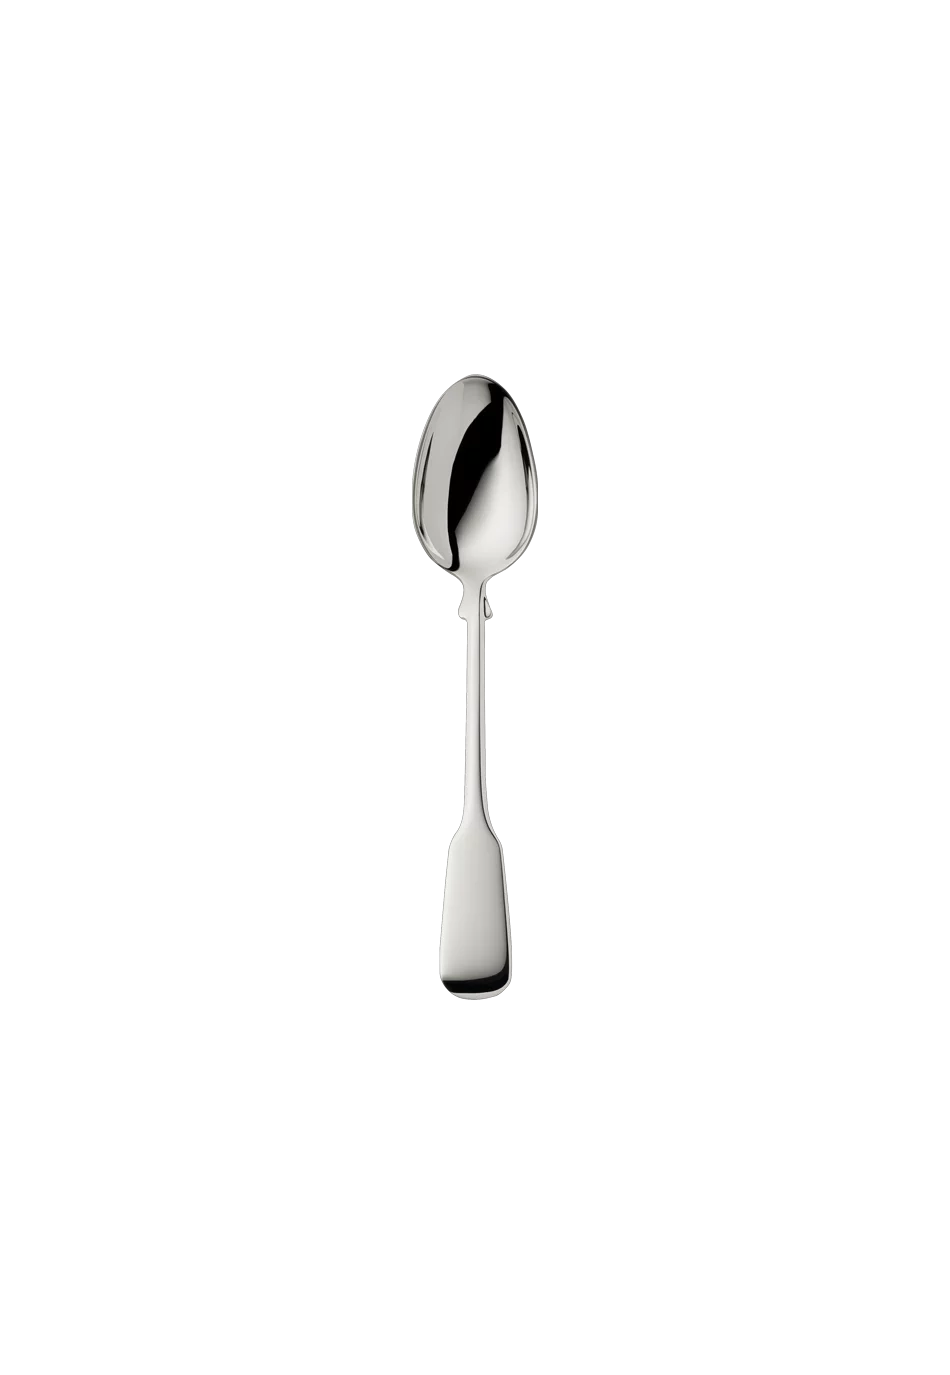 Spaten Coffee Spoon 13,0 Cm (150g massive silverplated)